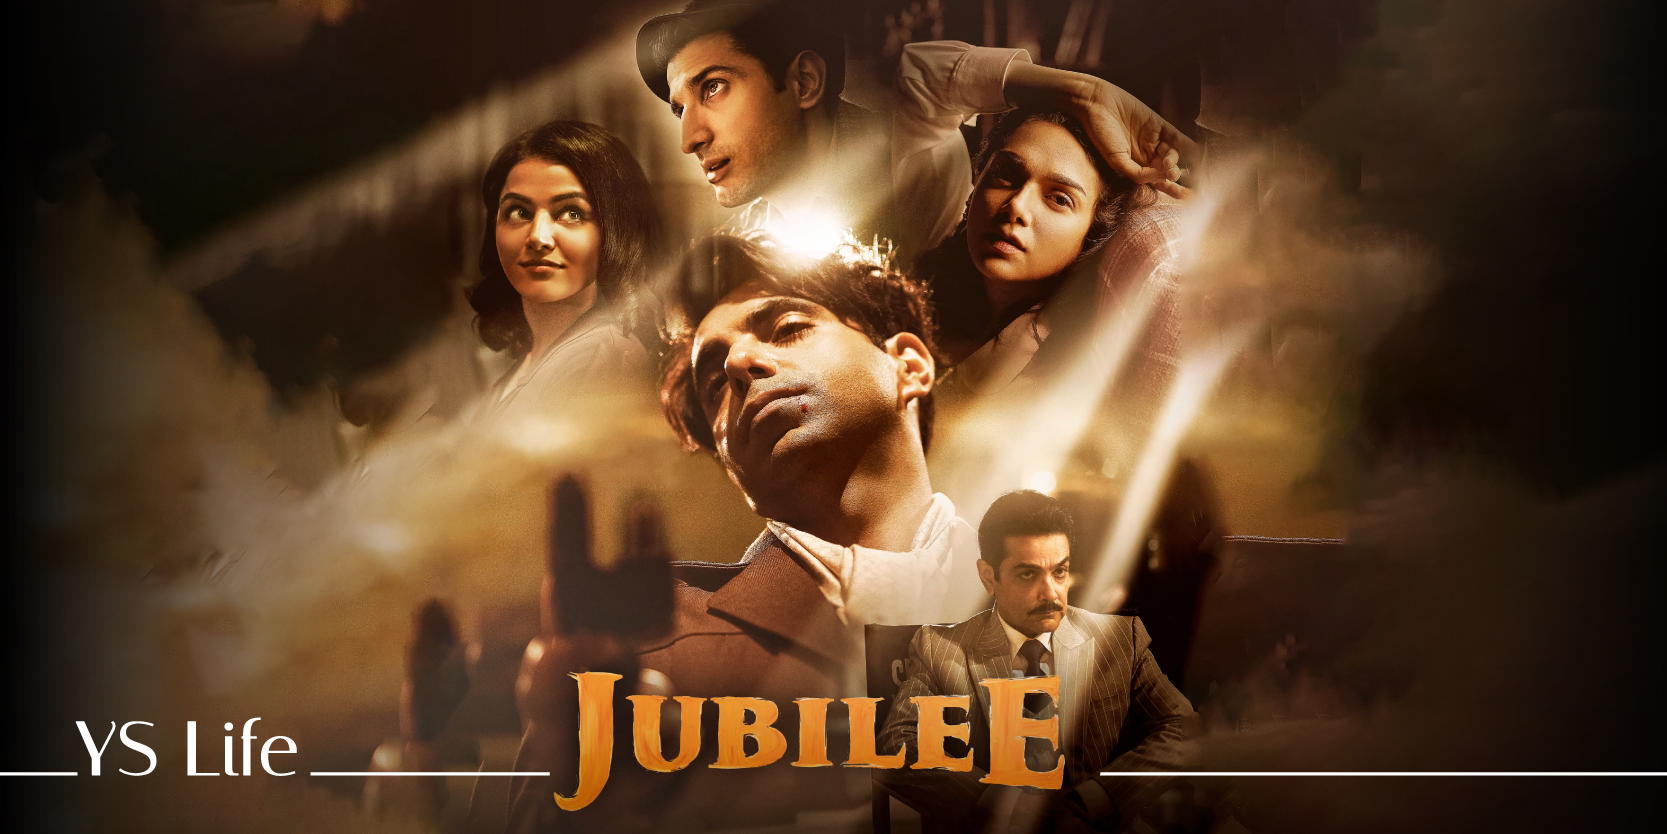 Indulgent and beautiful: ‘Jubilee’ reimagines the nostalgic and progressive past of Hindi cinema